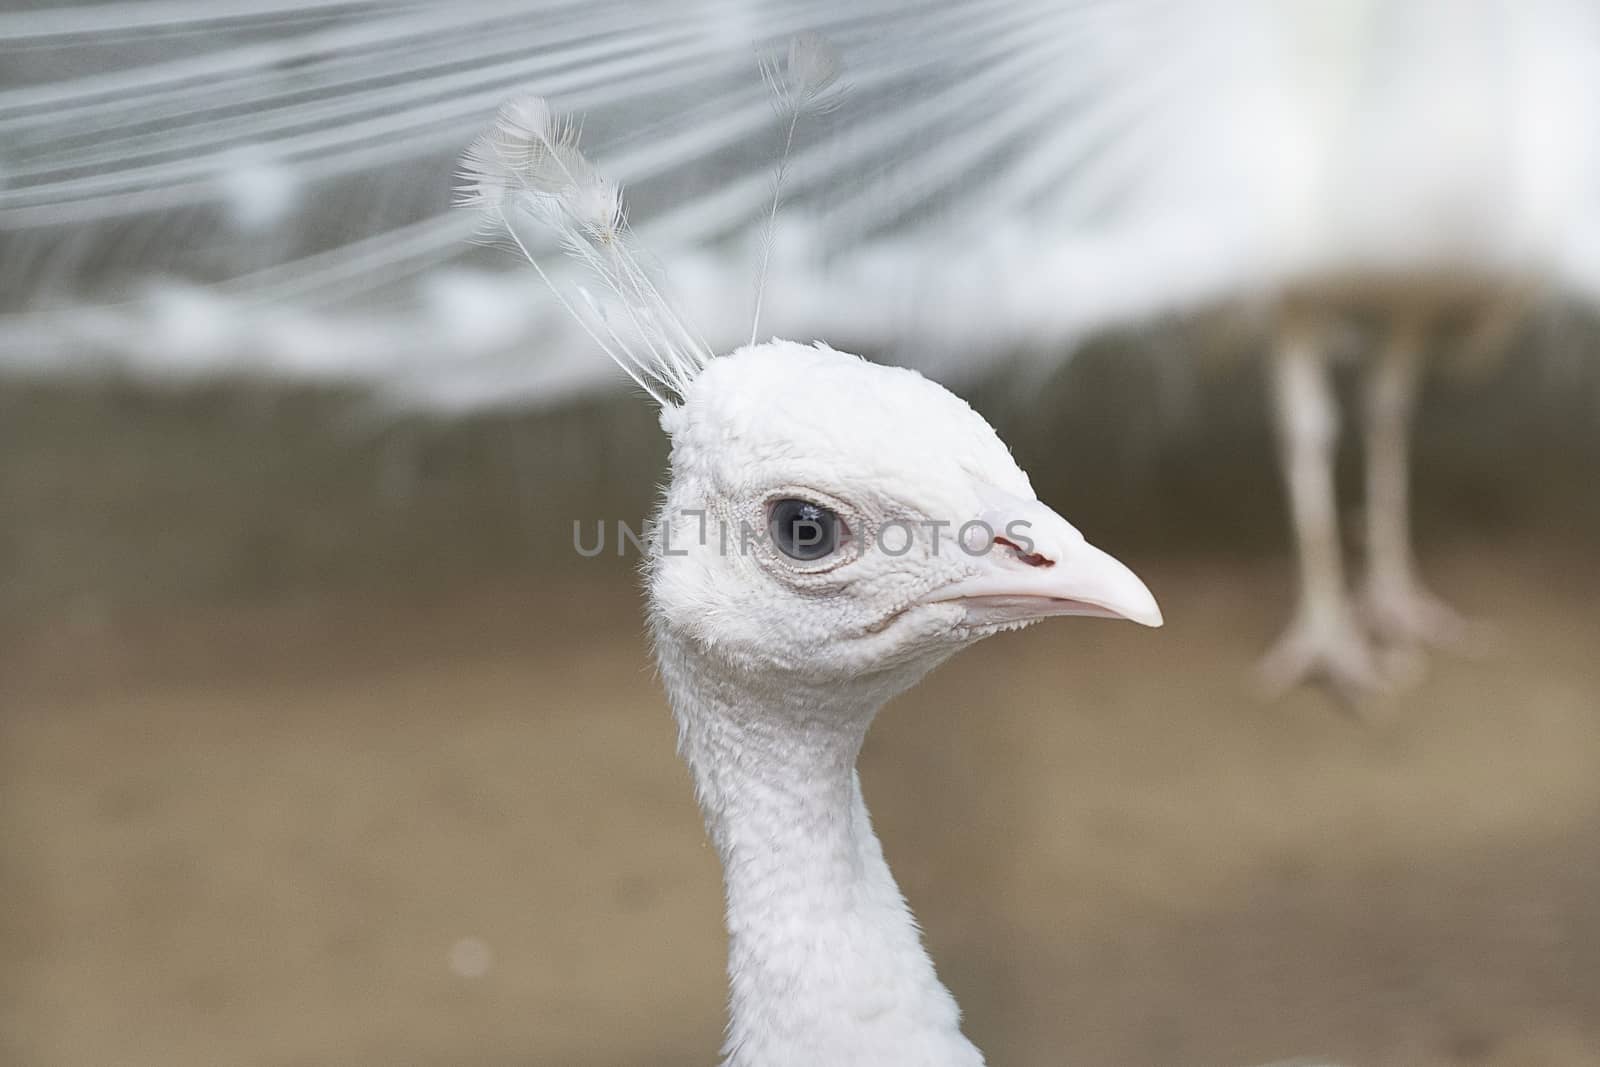 White peacock head close-up